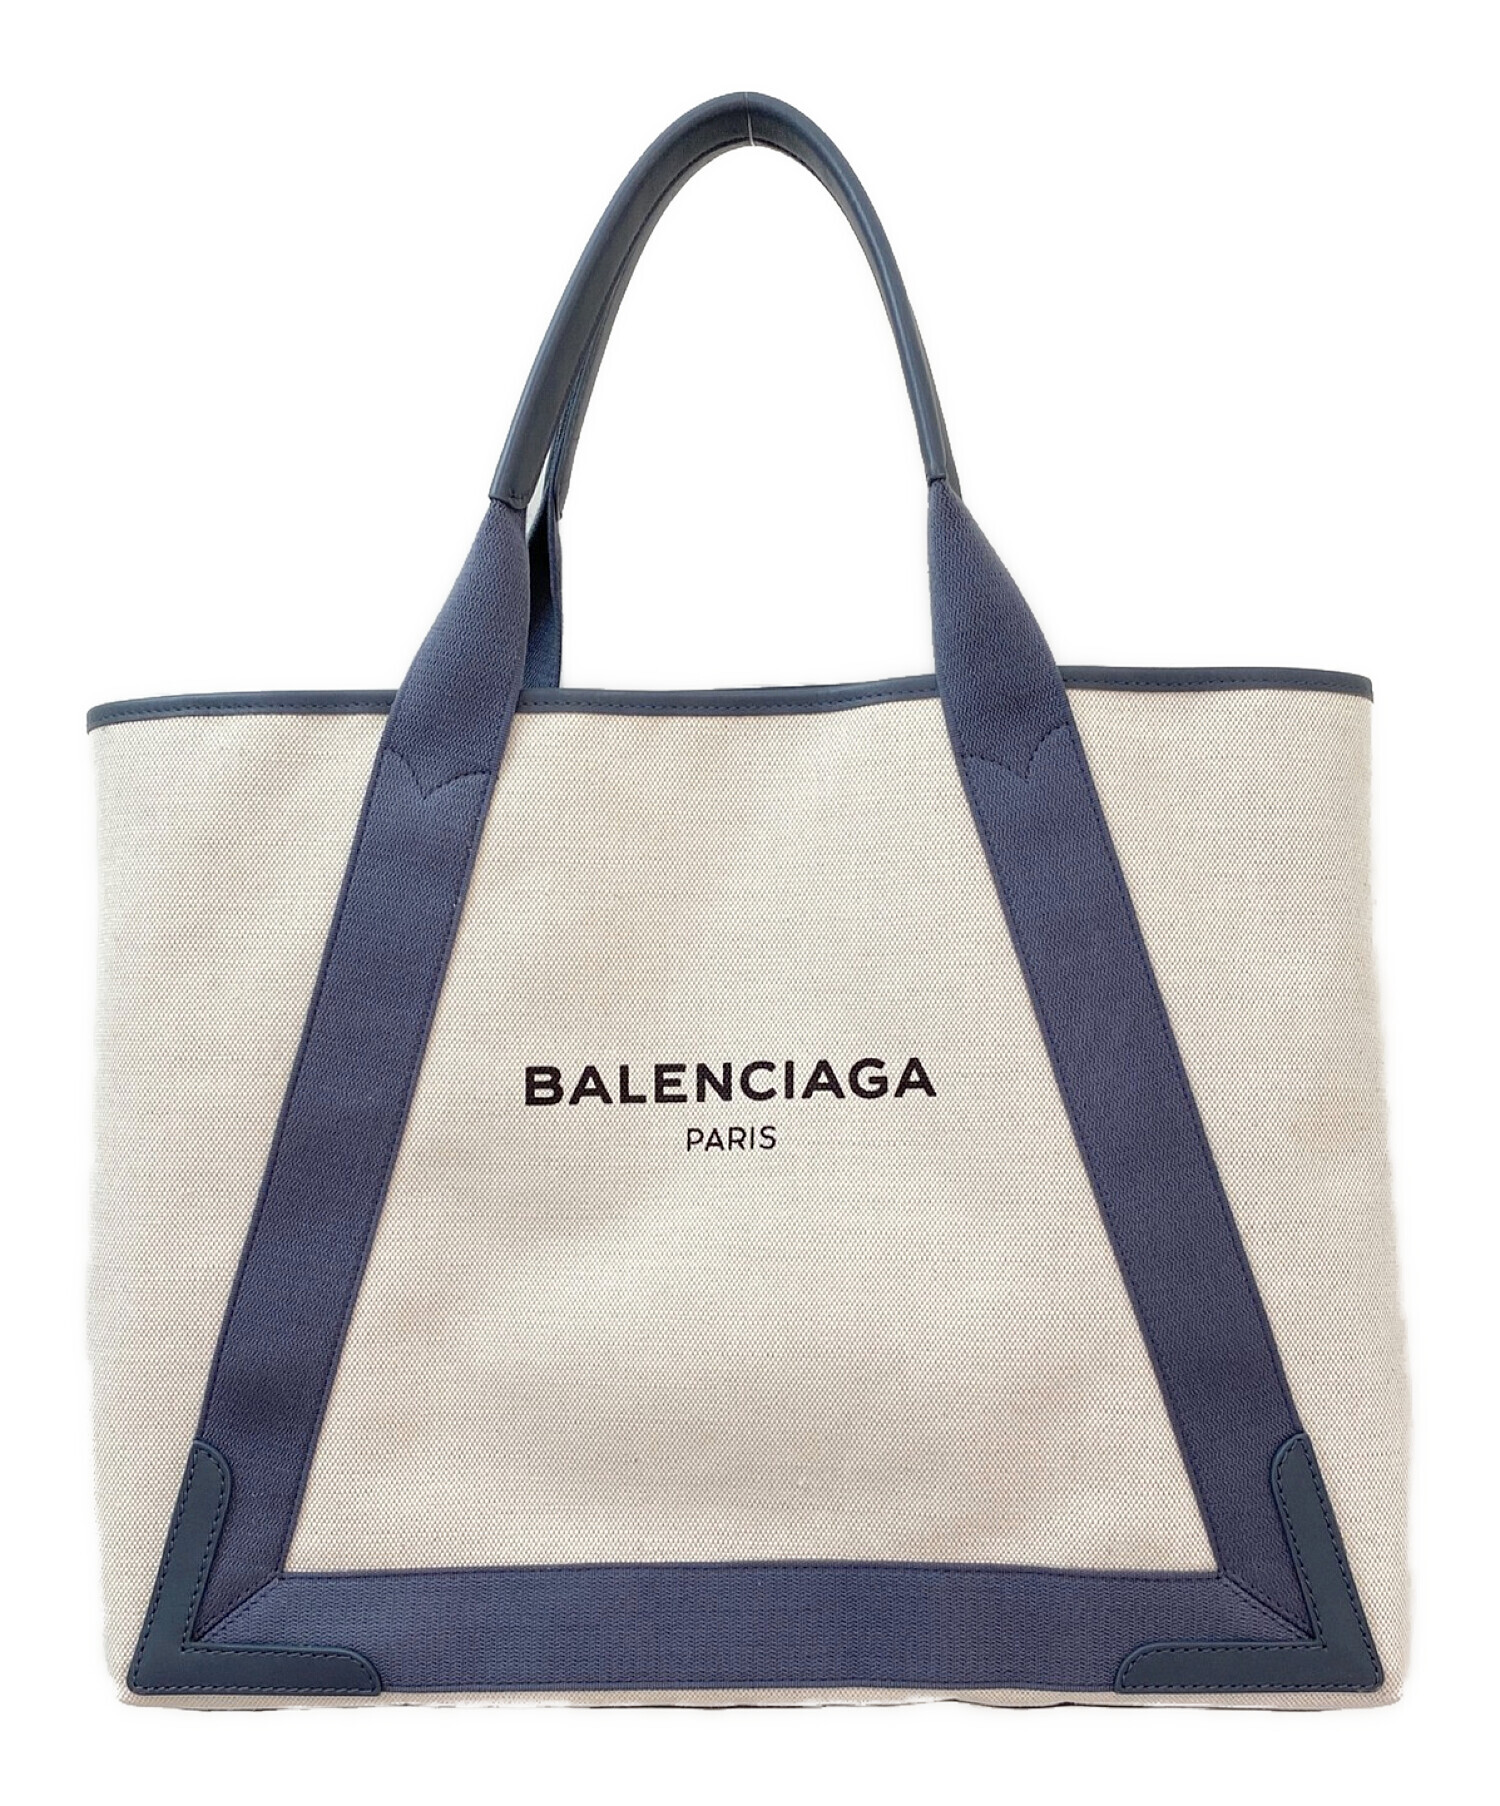 BALENCIAGA (バレンシアガ) ミディアムカバスバッグ グルー×ホワイト サイズ:M